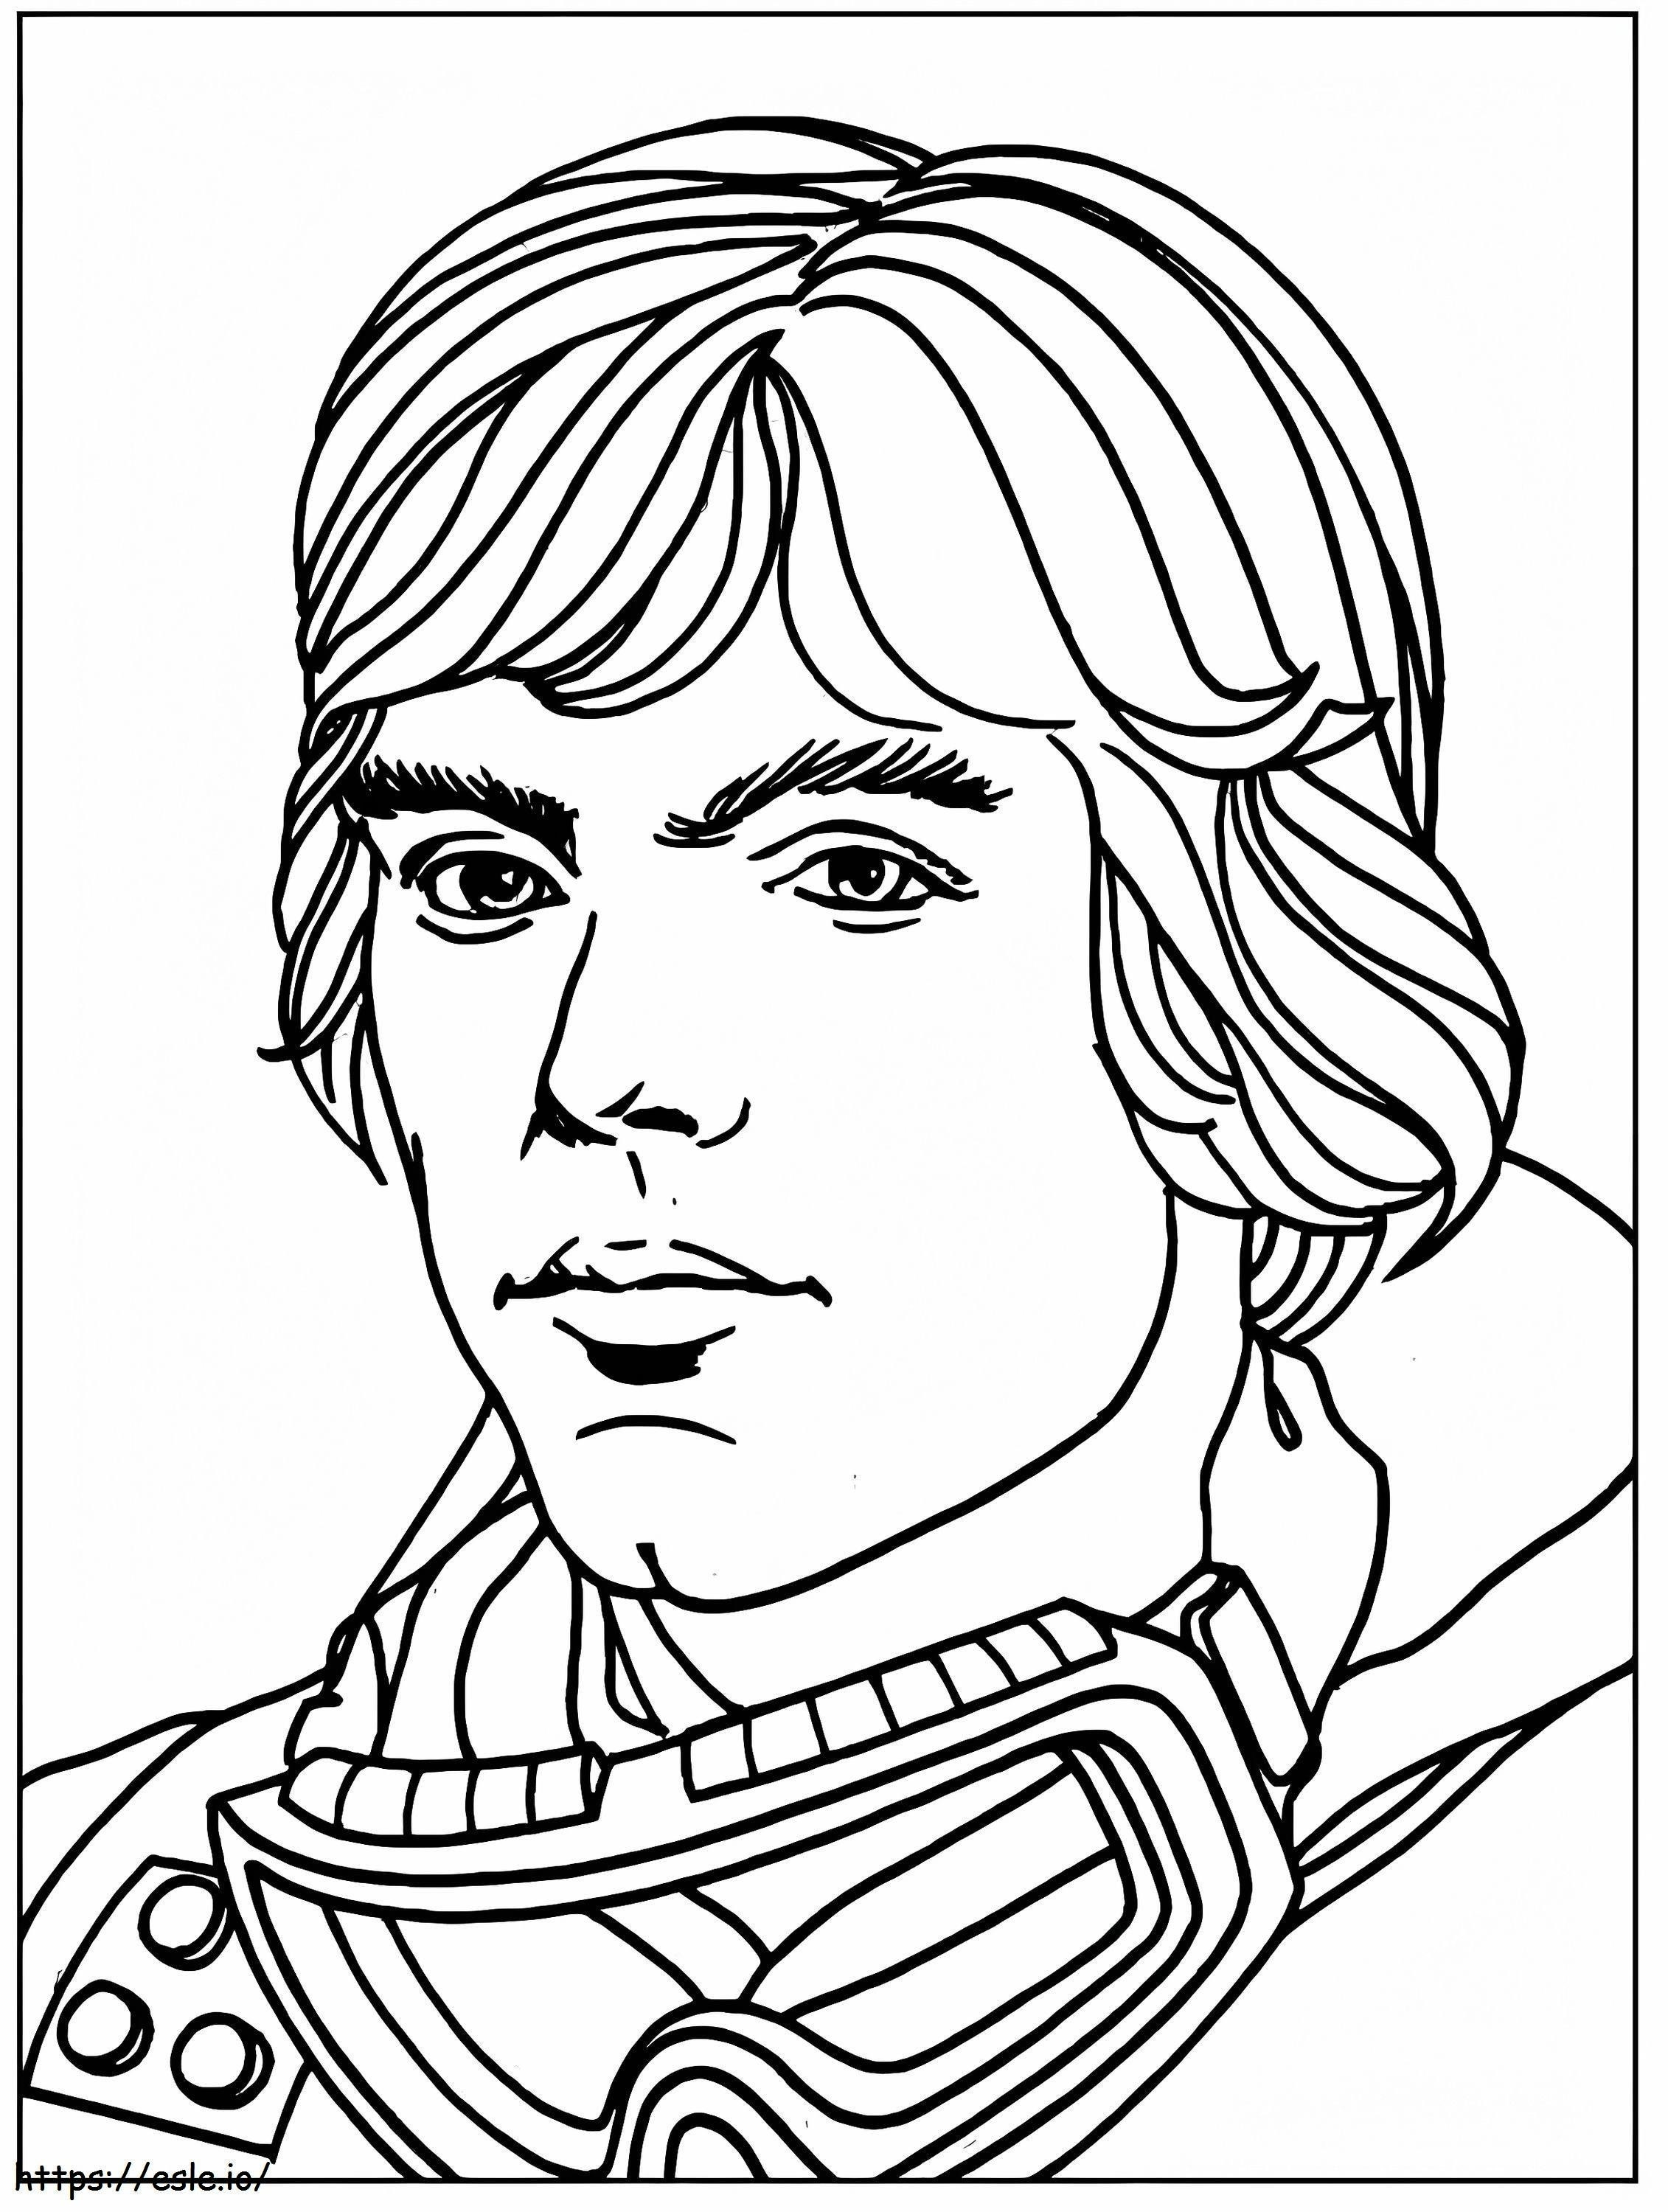 Cara De Luke Skywalker de colorat